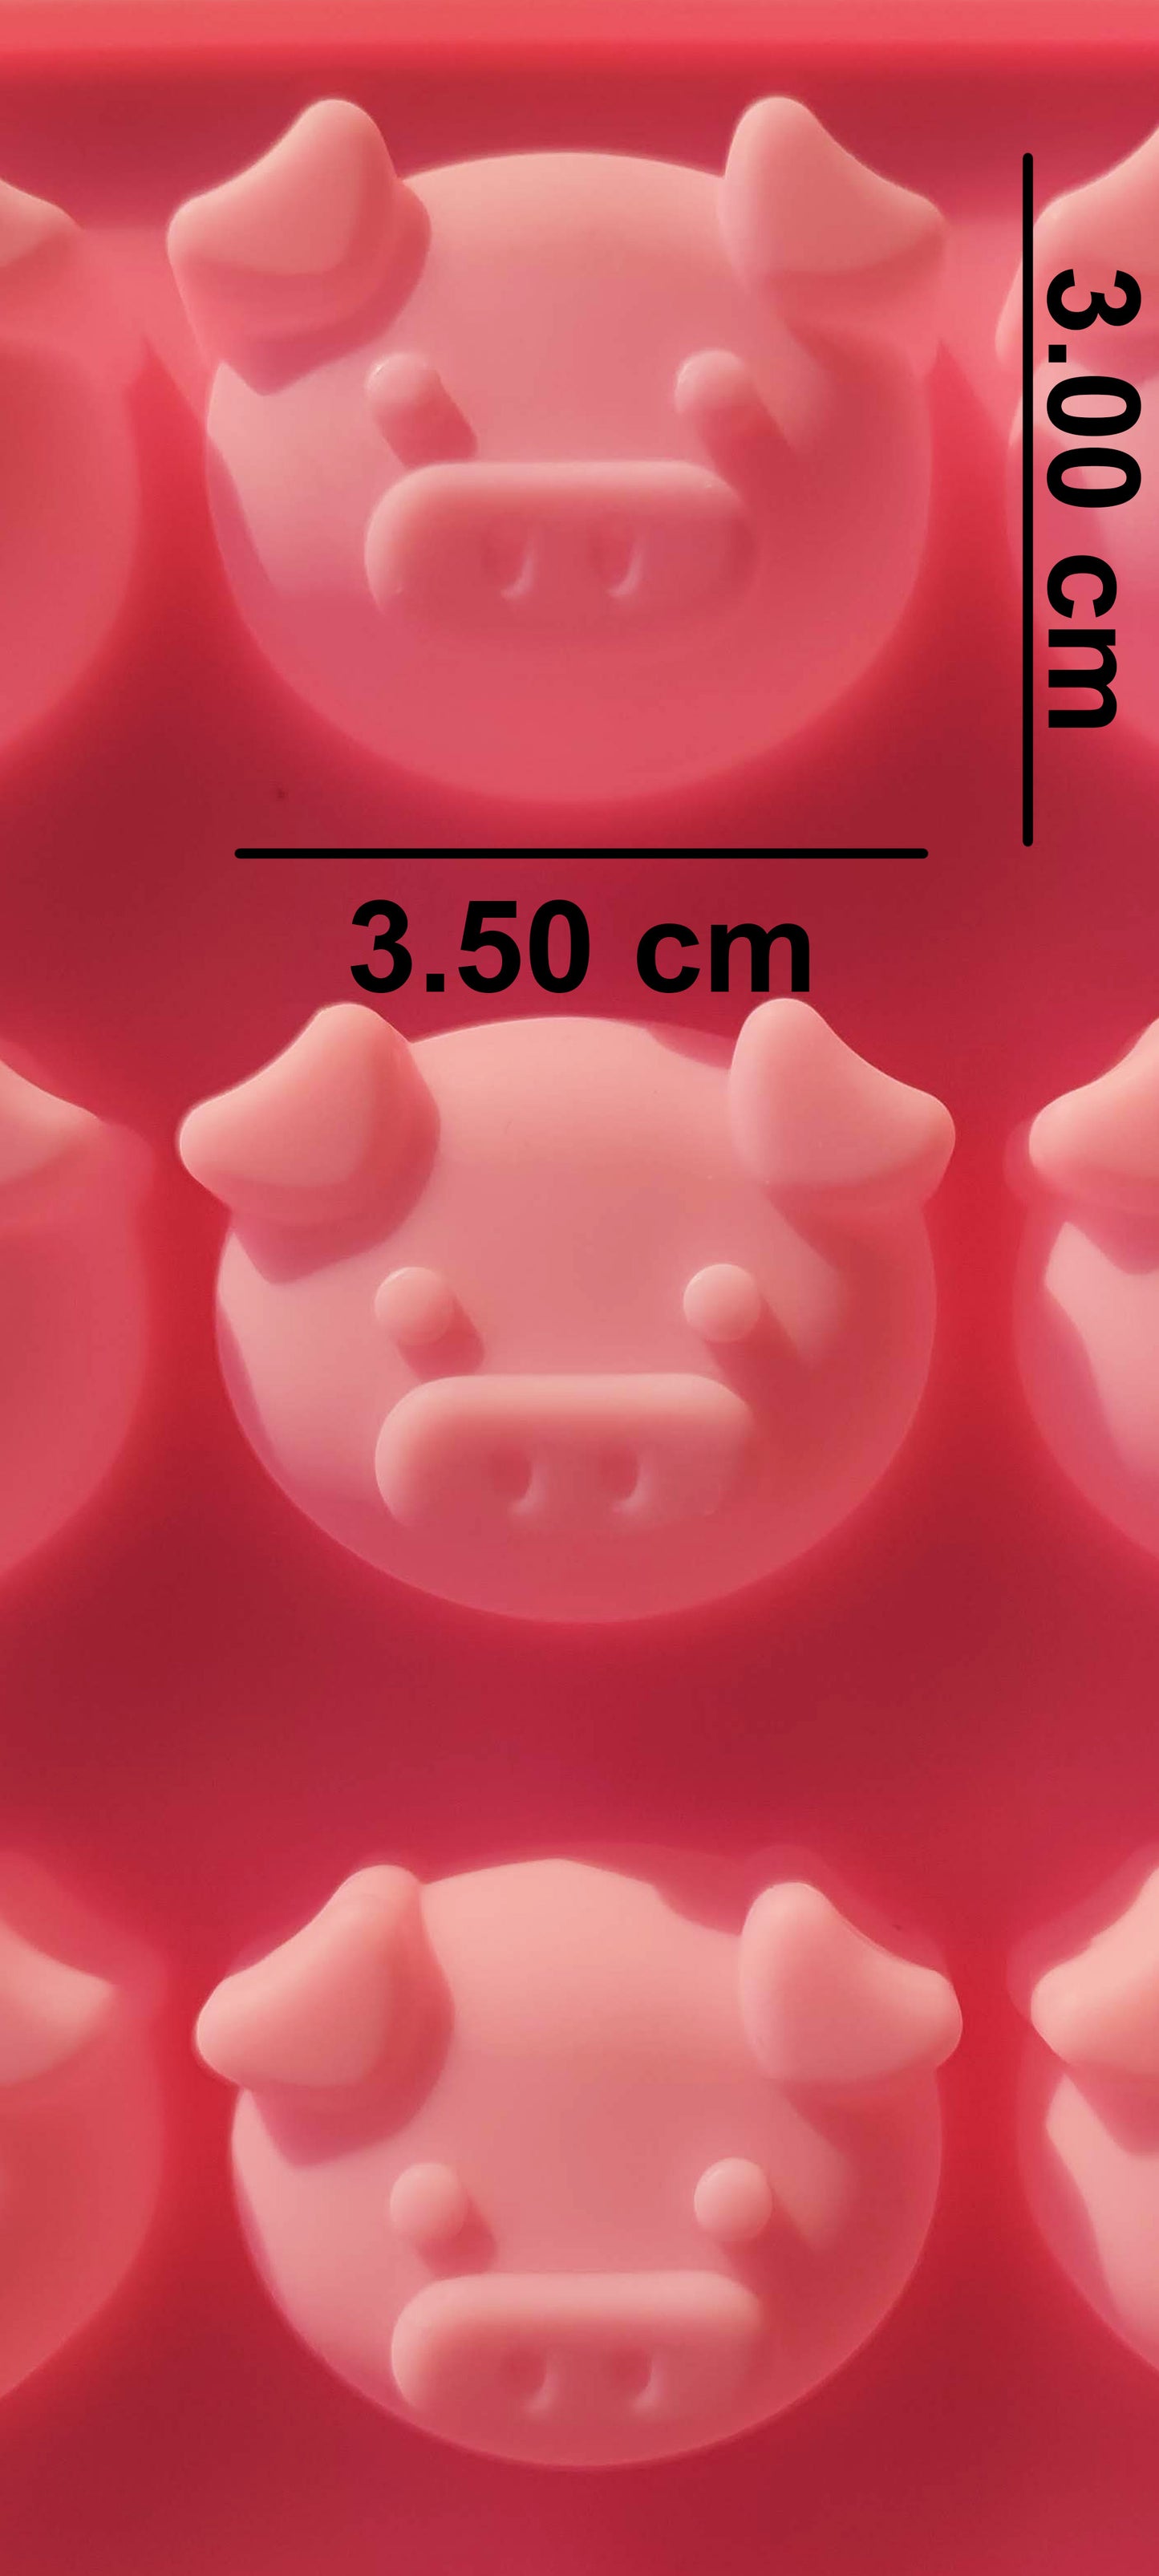 Piggy faces